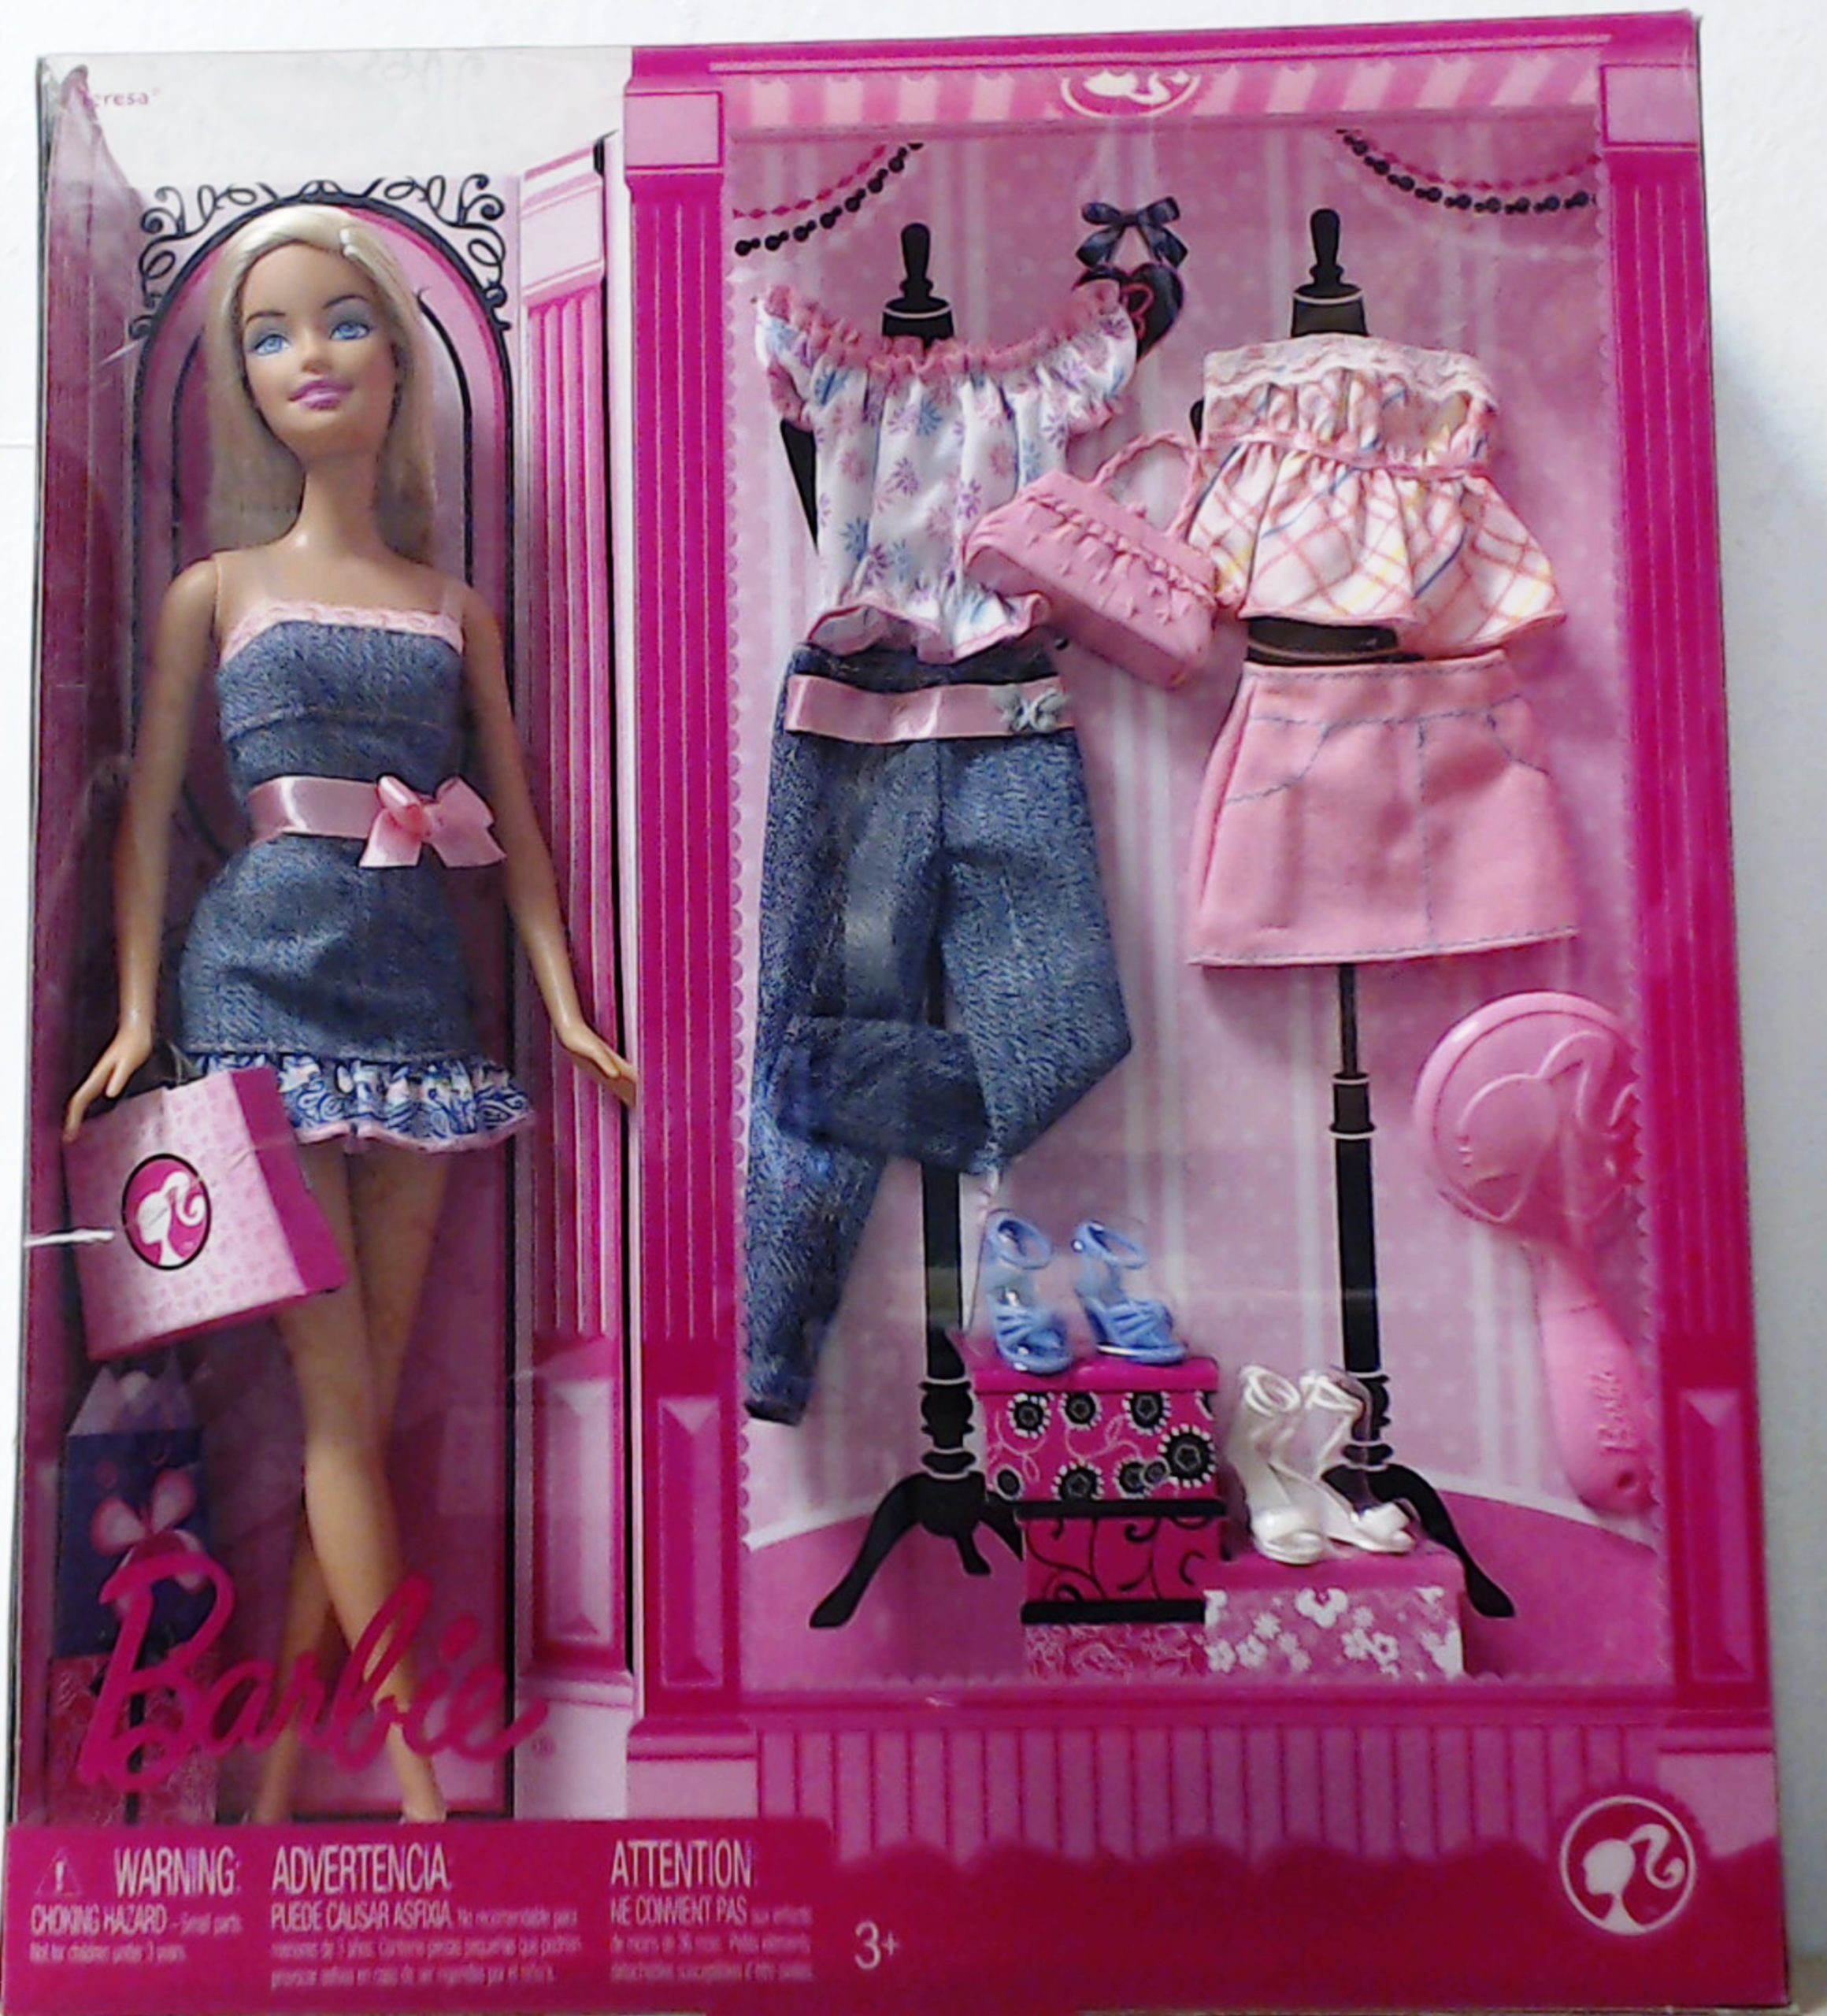 barbie set barbie set